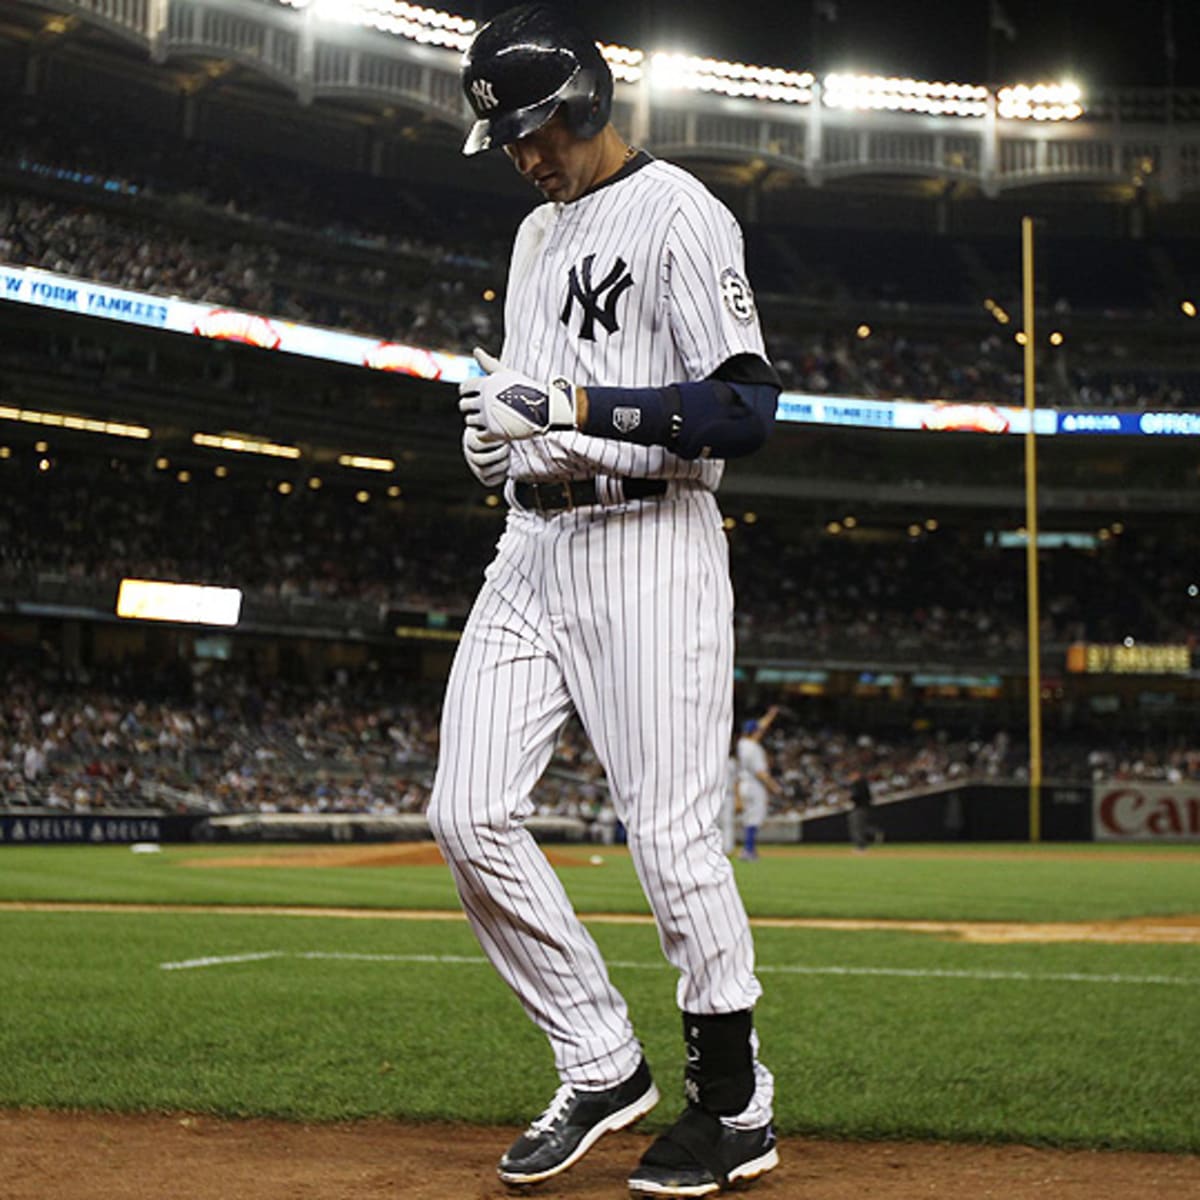 Yankees To Wear Uniform Patches Celebrating Derek Jeter - CBS New York